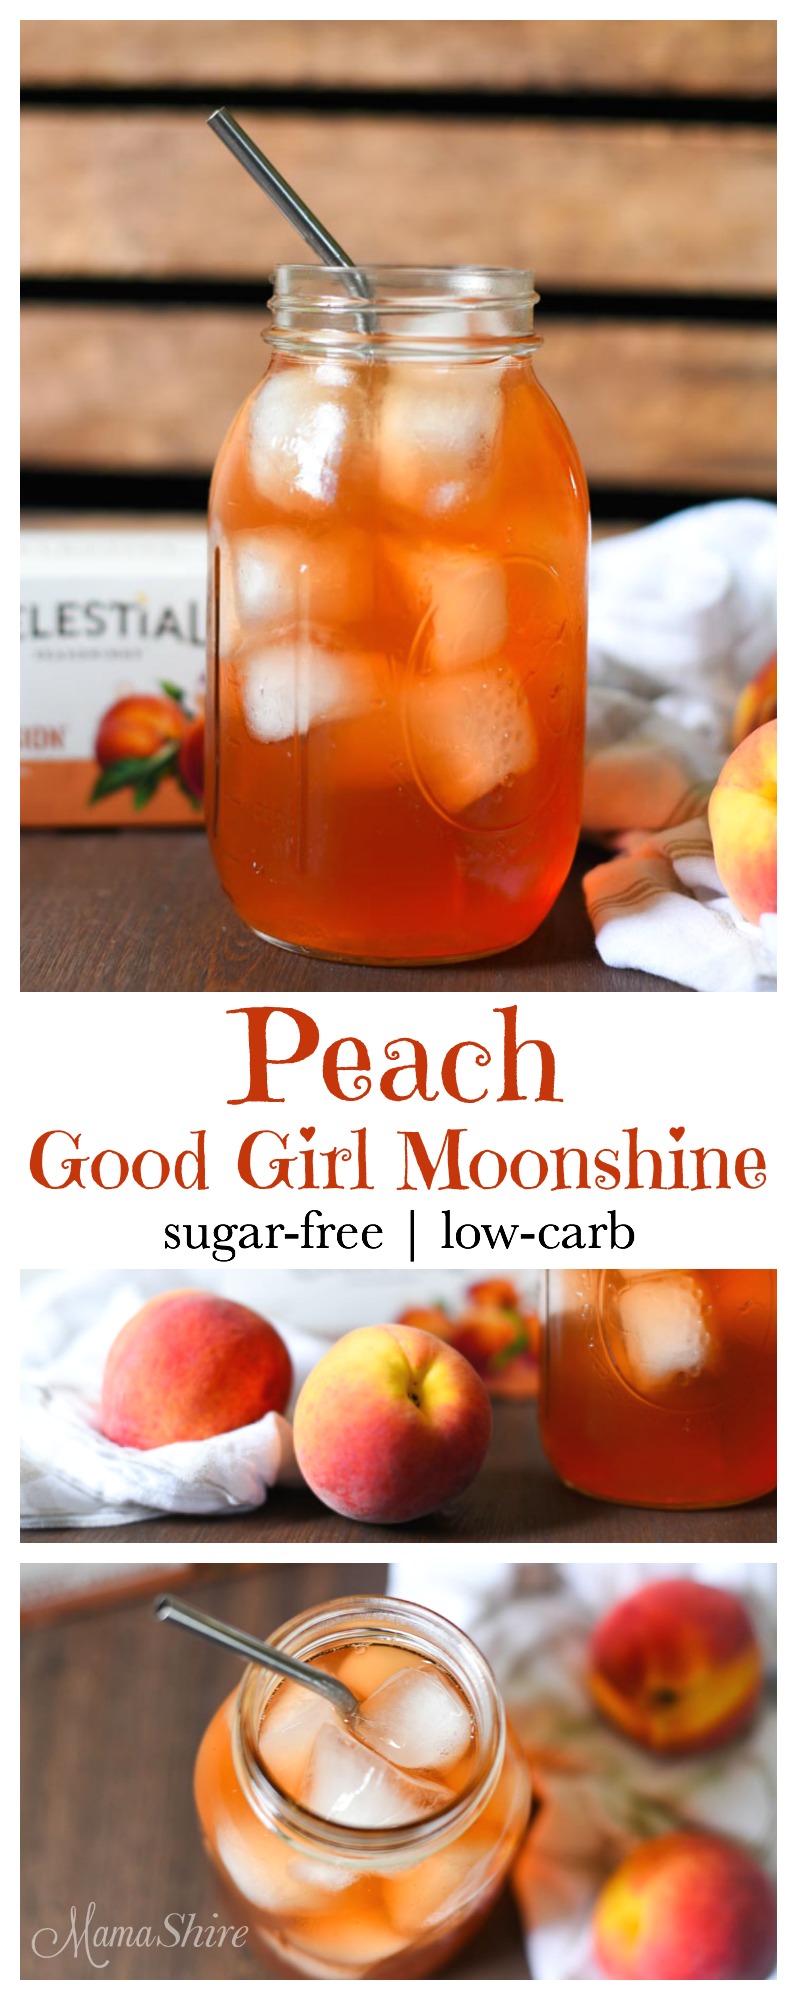 Peach Good Girl Moonshine